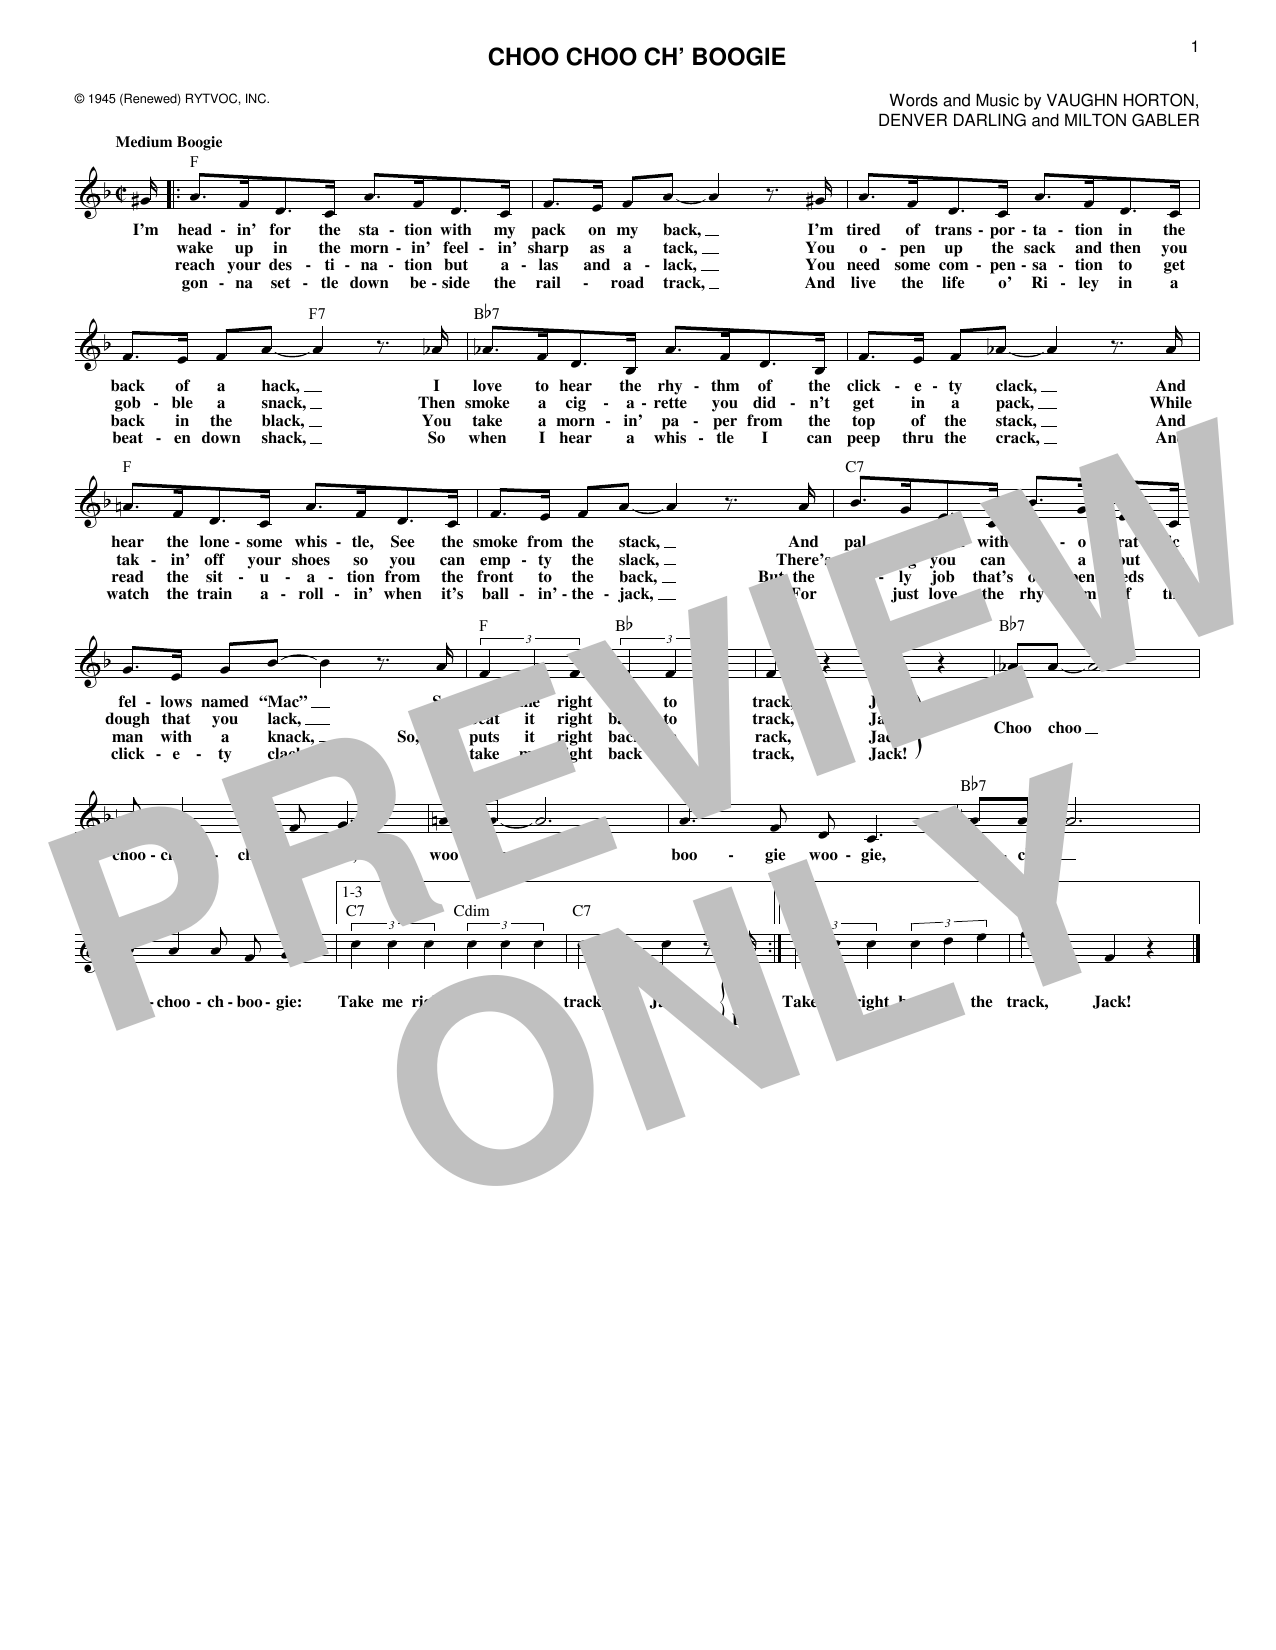 Denver Darling Choo Choo Ch' Boogie Sheet Music Notes & Chords for Melody Line, Lyrics & Chords - Download or Print PDF